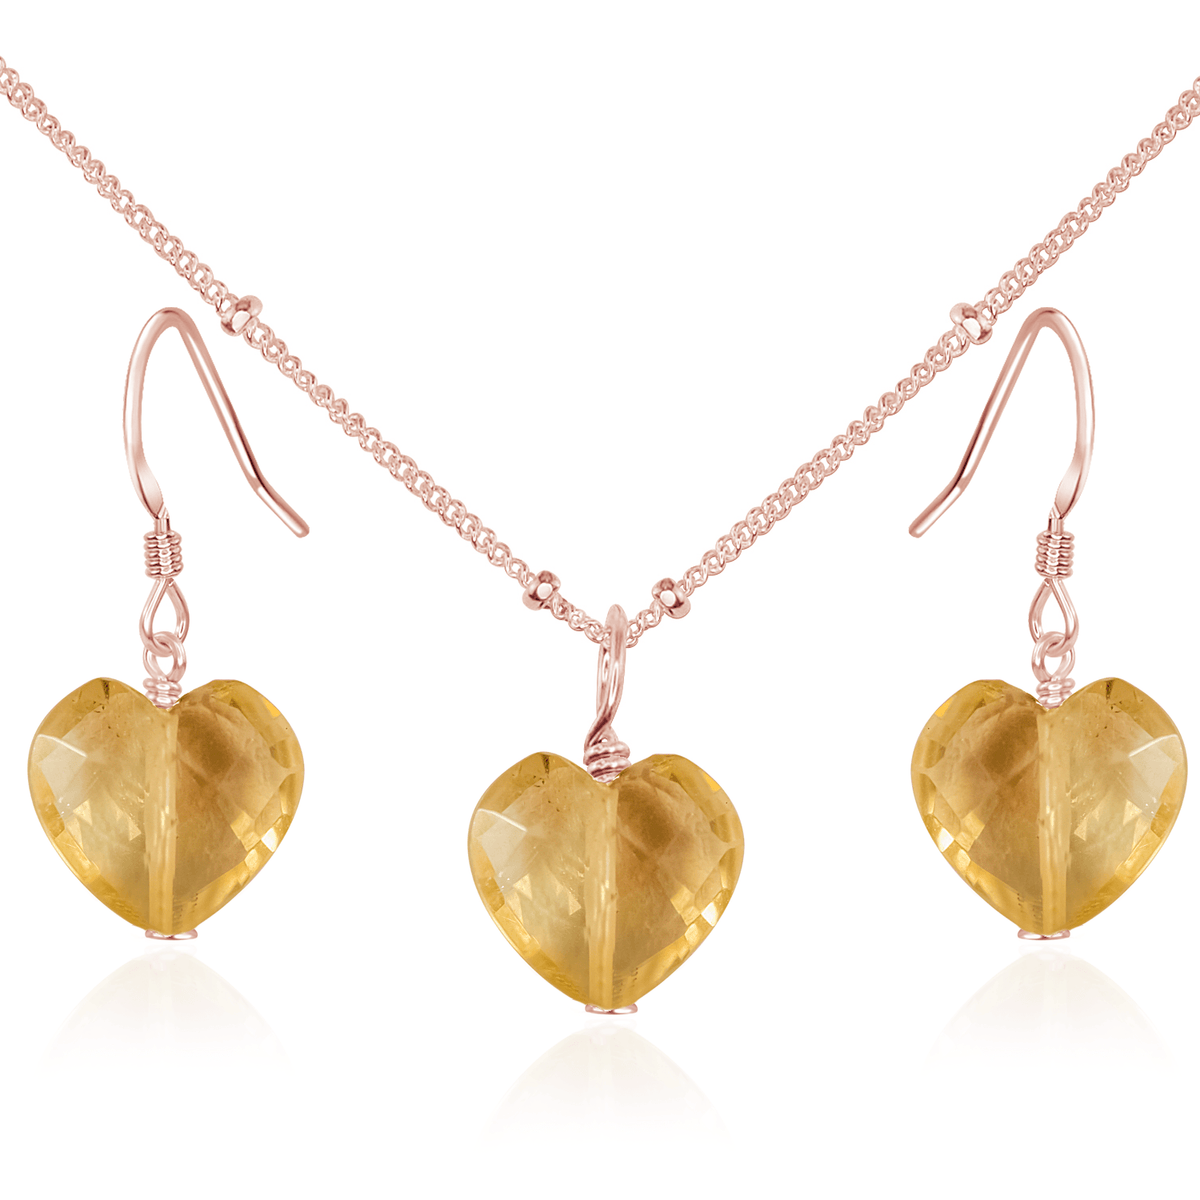 Citrine Crystal Heart Jewellery Set - Citrine Crystal Heart Jewellery Set - 14k Rose Gold Fill / Satellite / Necklace & Earrings - Luna Tide Handmade Crystal Jewellery